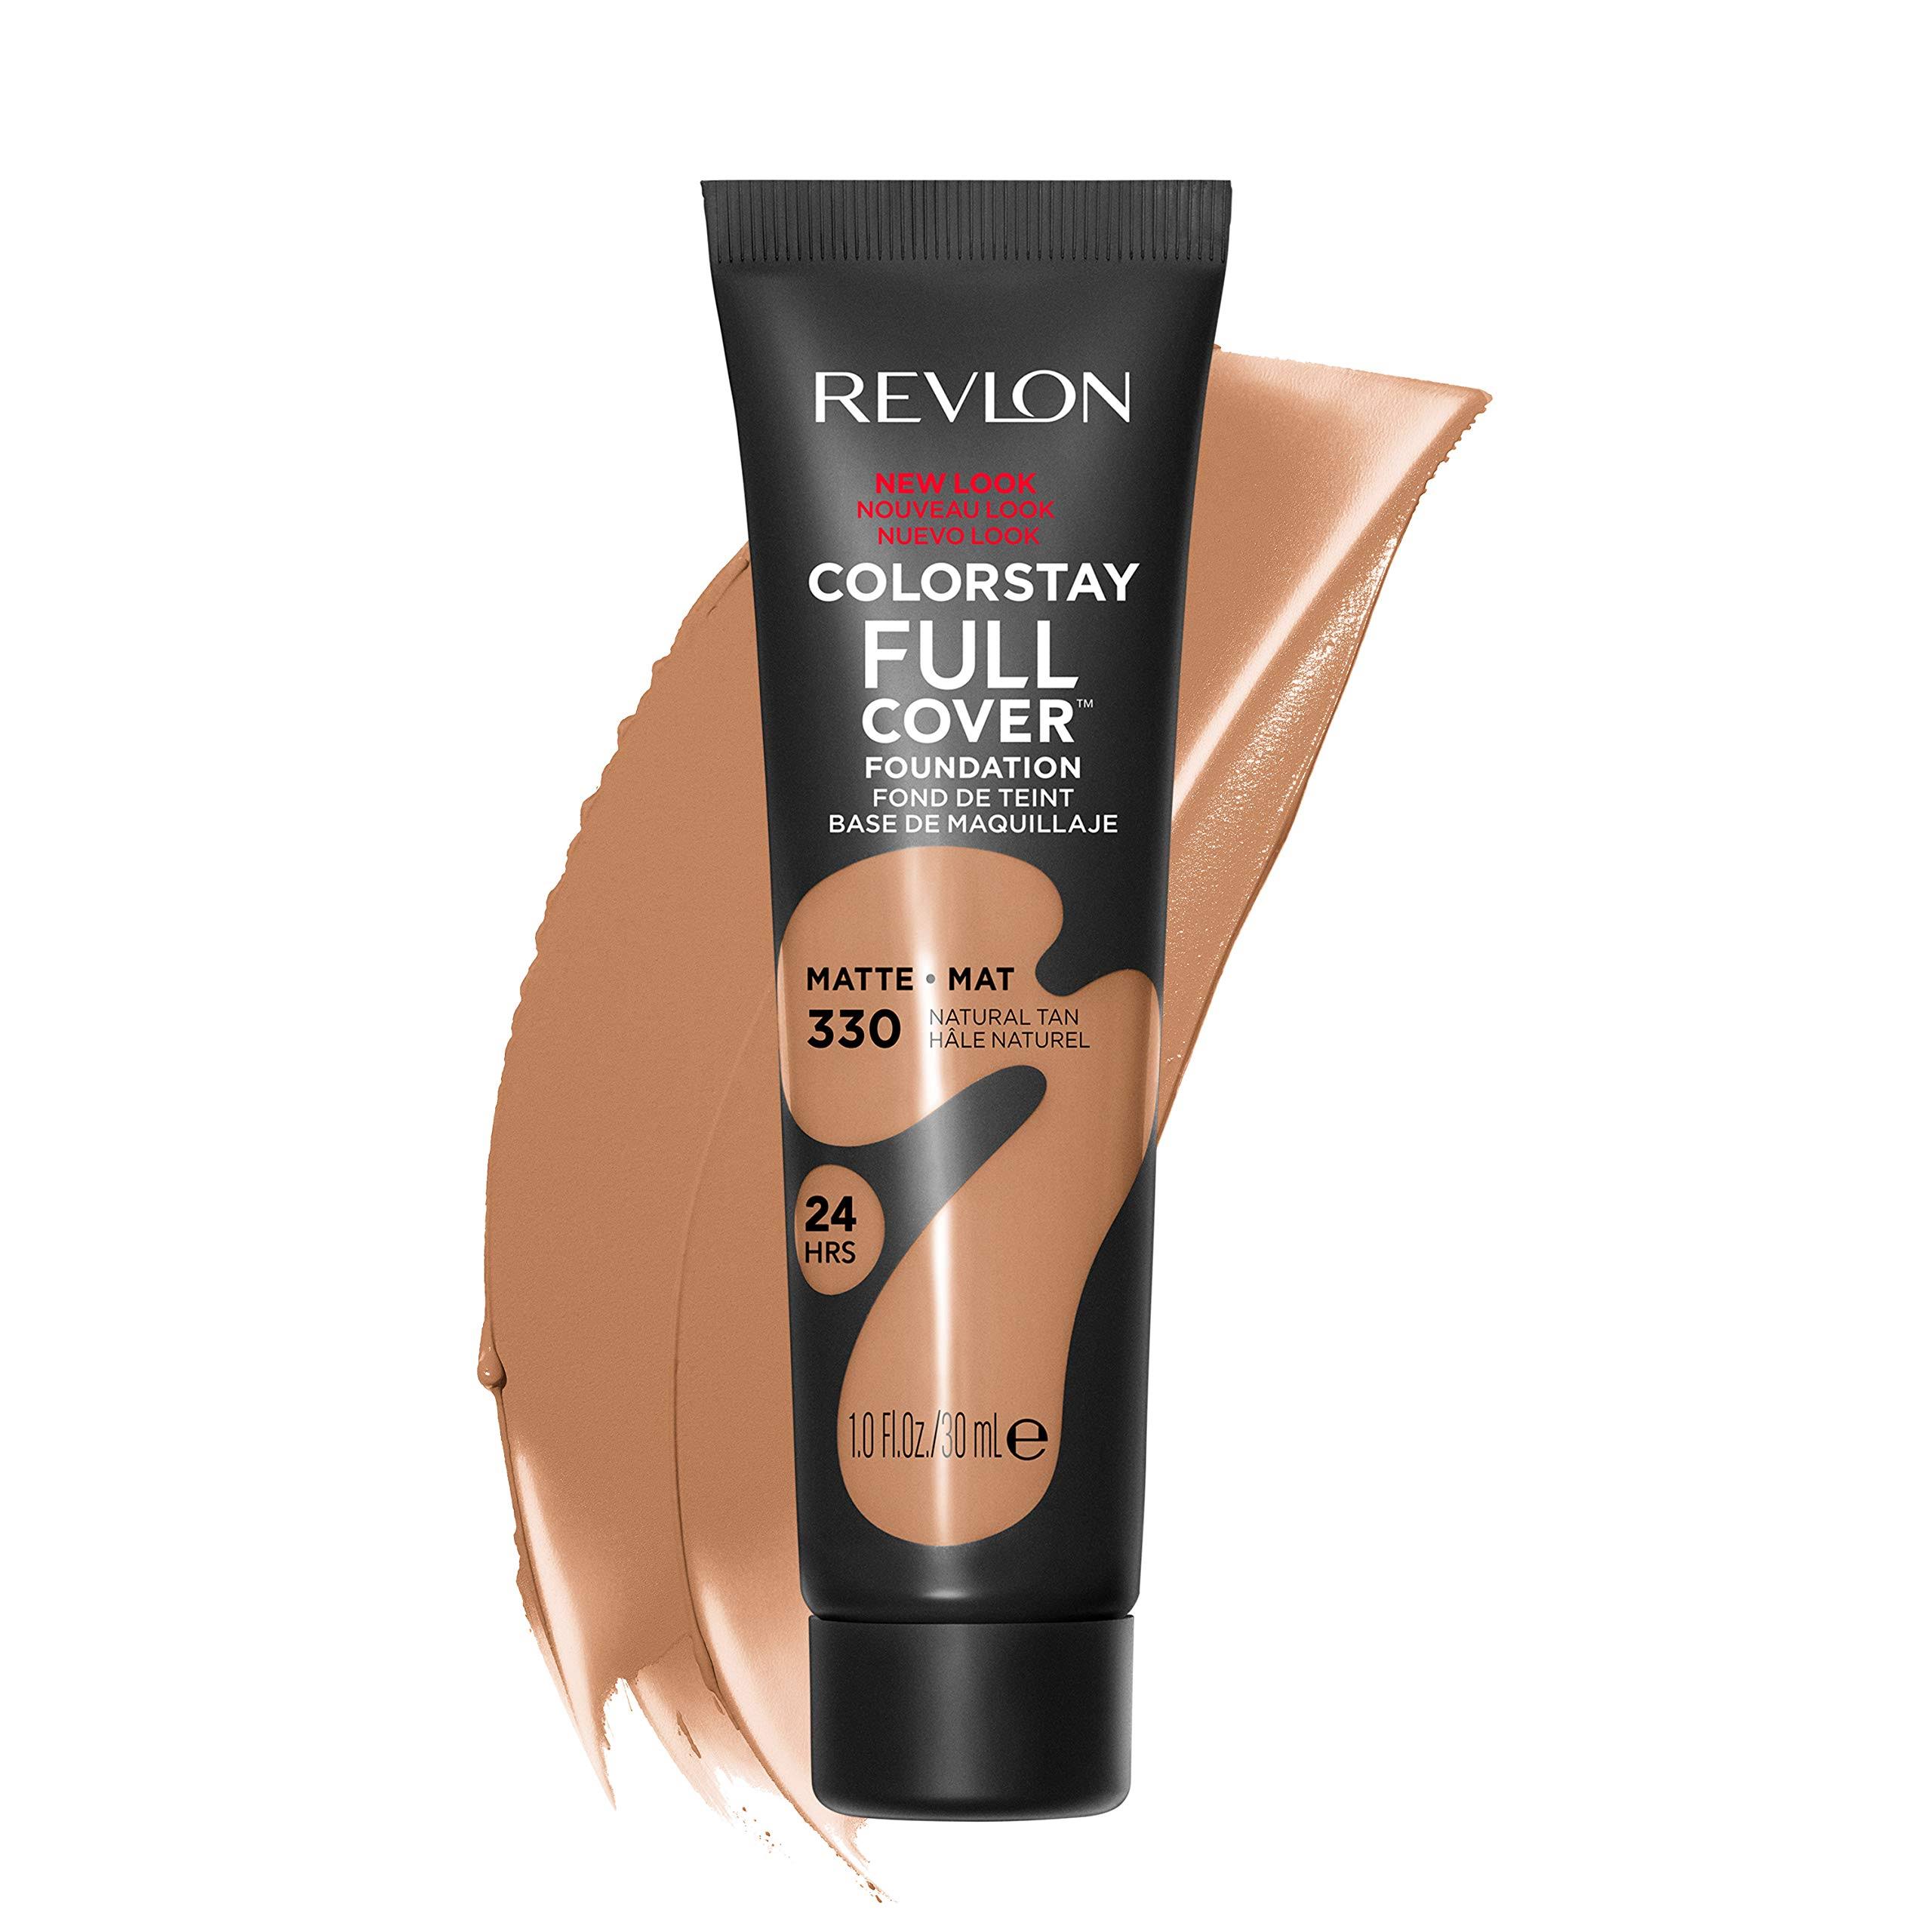 Revlon Colorstay Full Cover Foundation - 330 Natural Tan, 1oz